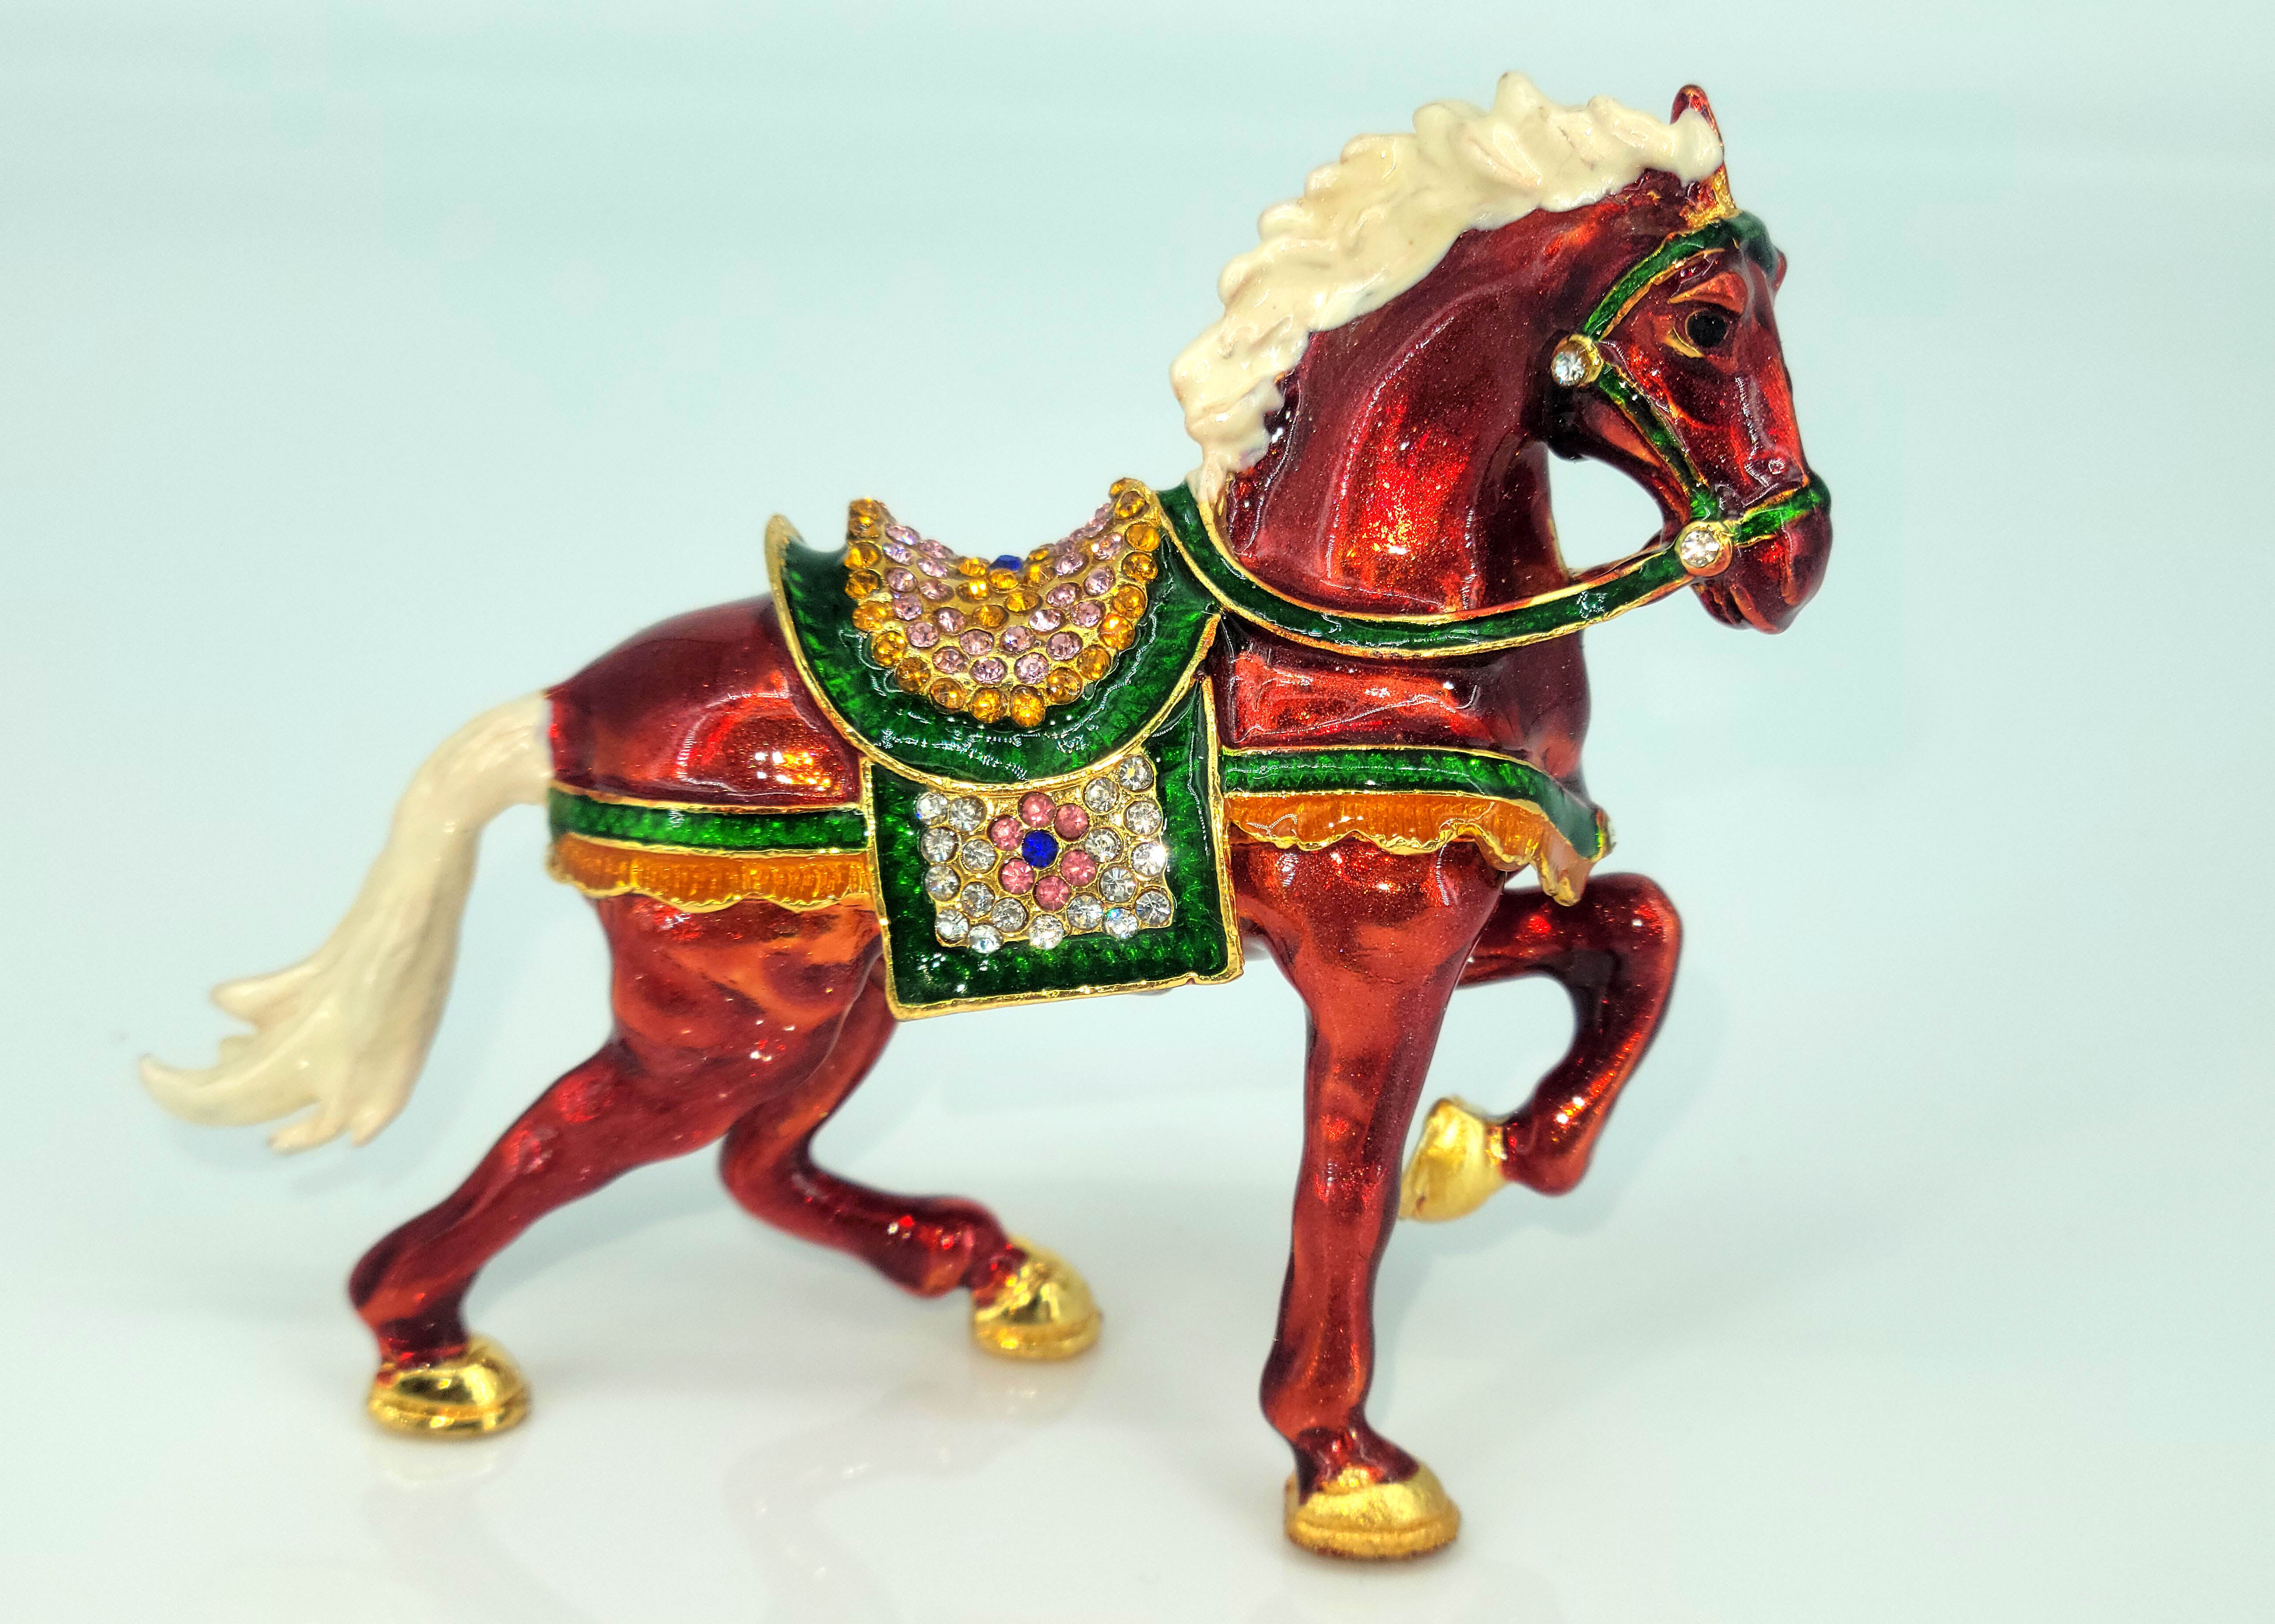 Red Running Horse Decoration Piece I Pakistani Artisan Design I Decoration Piece Accent I Metal Stone Decor